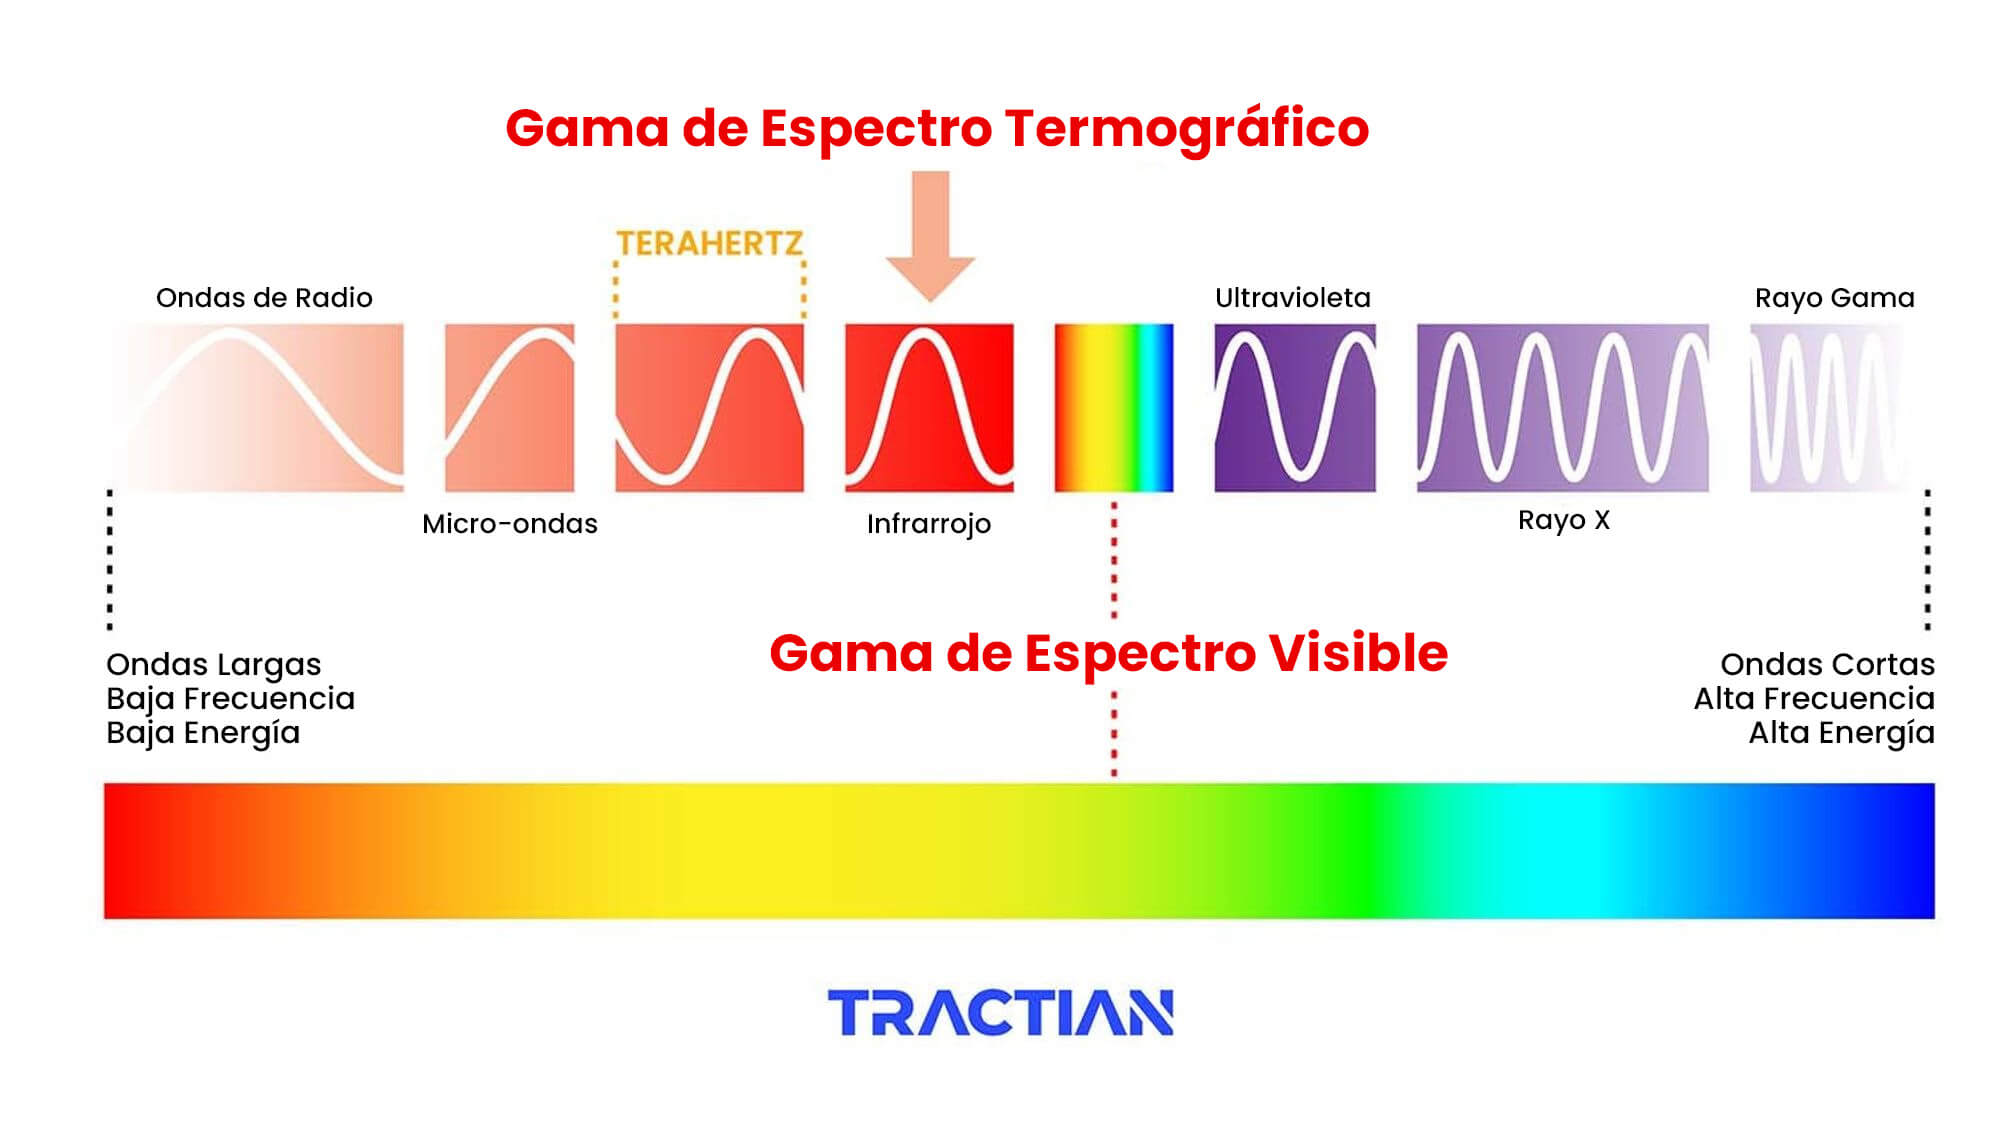 Gama de espectro termografico 